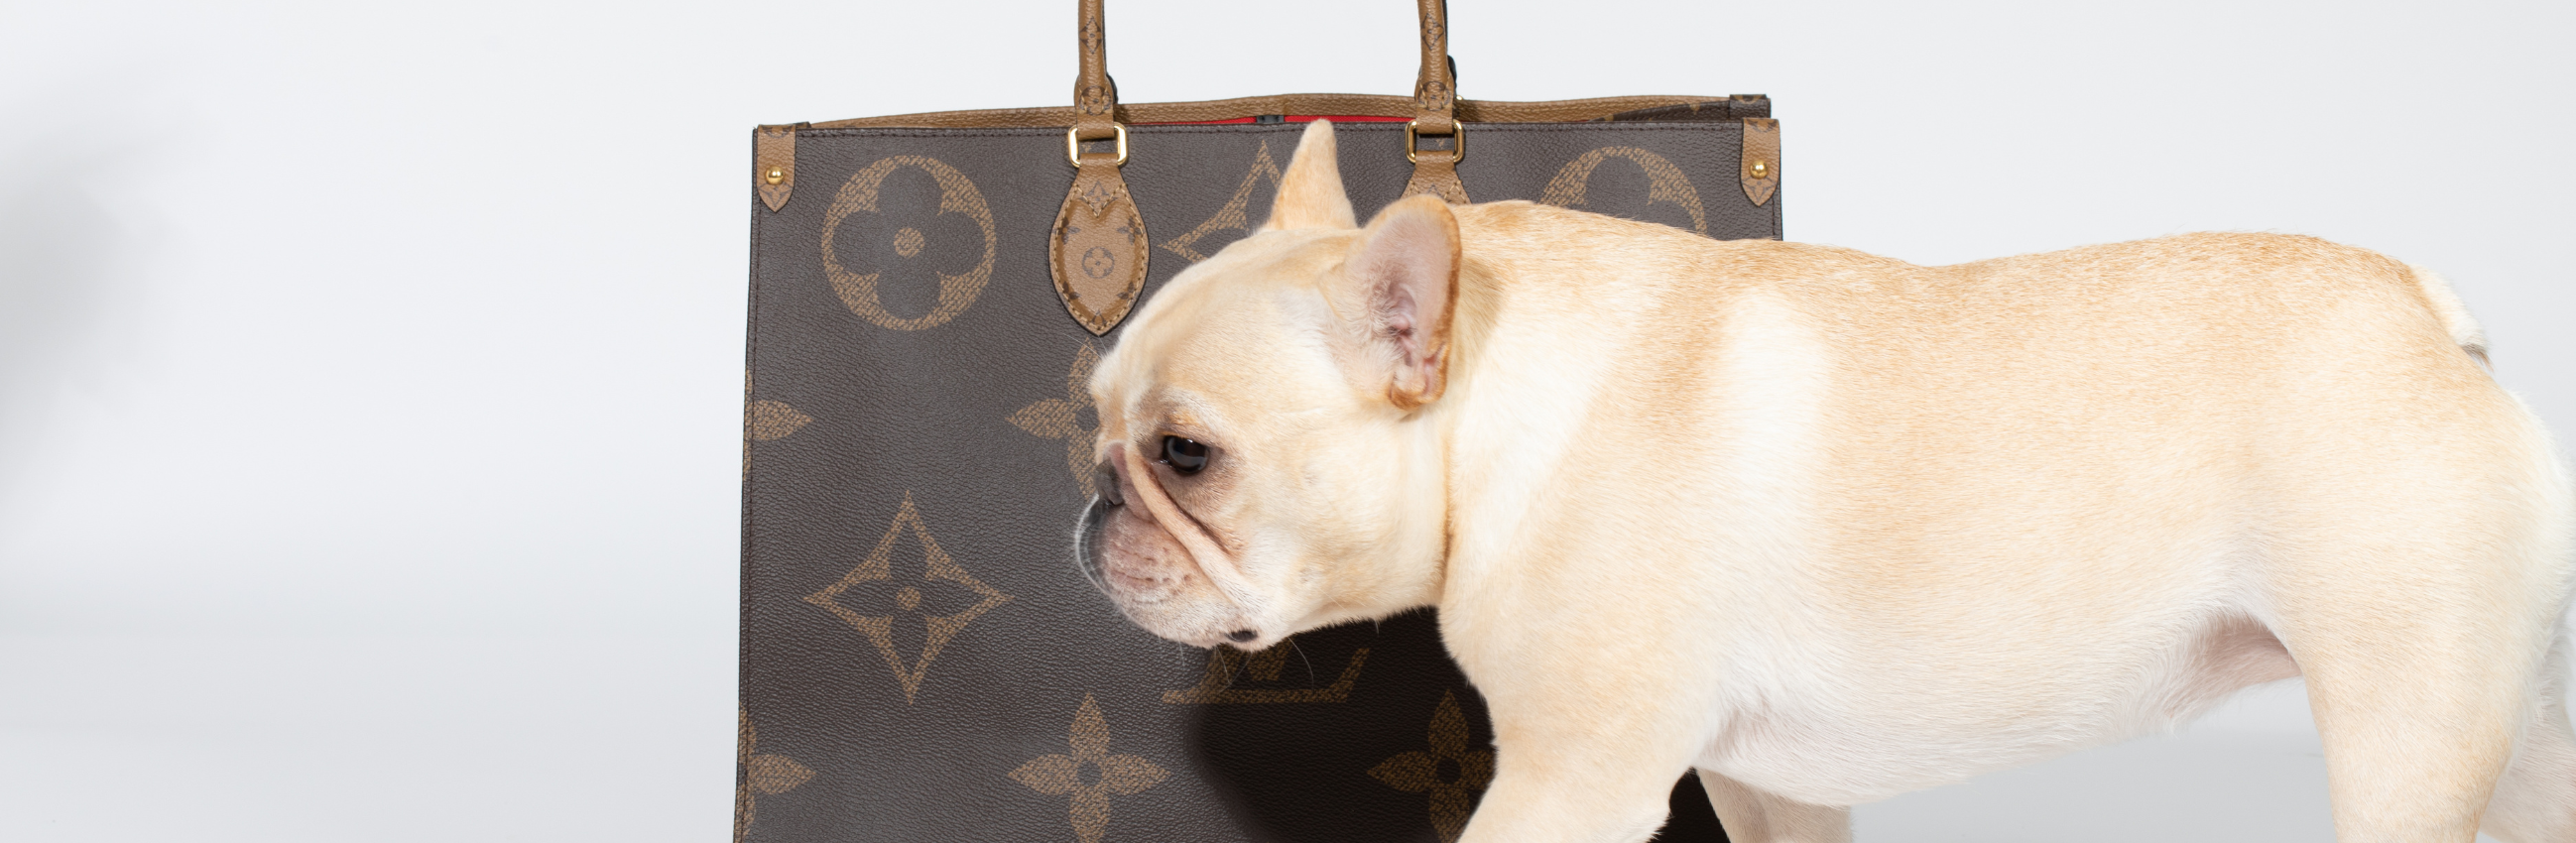 Top 7 Most Expensive Louis Vuitton Bags, myGemma